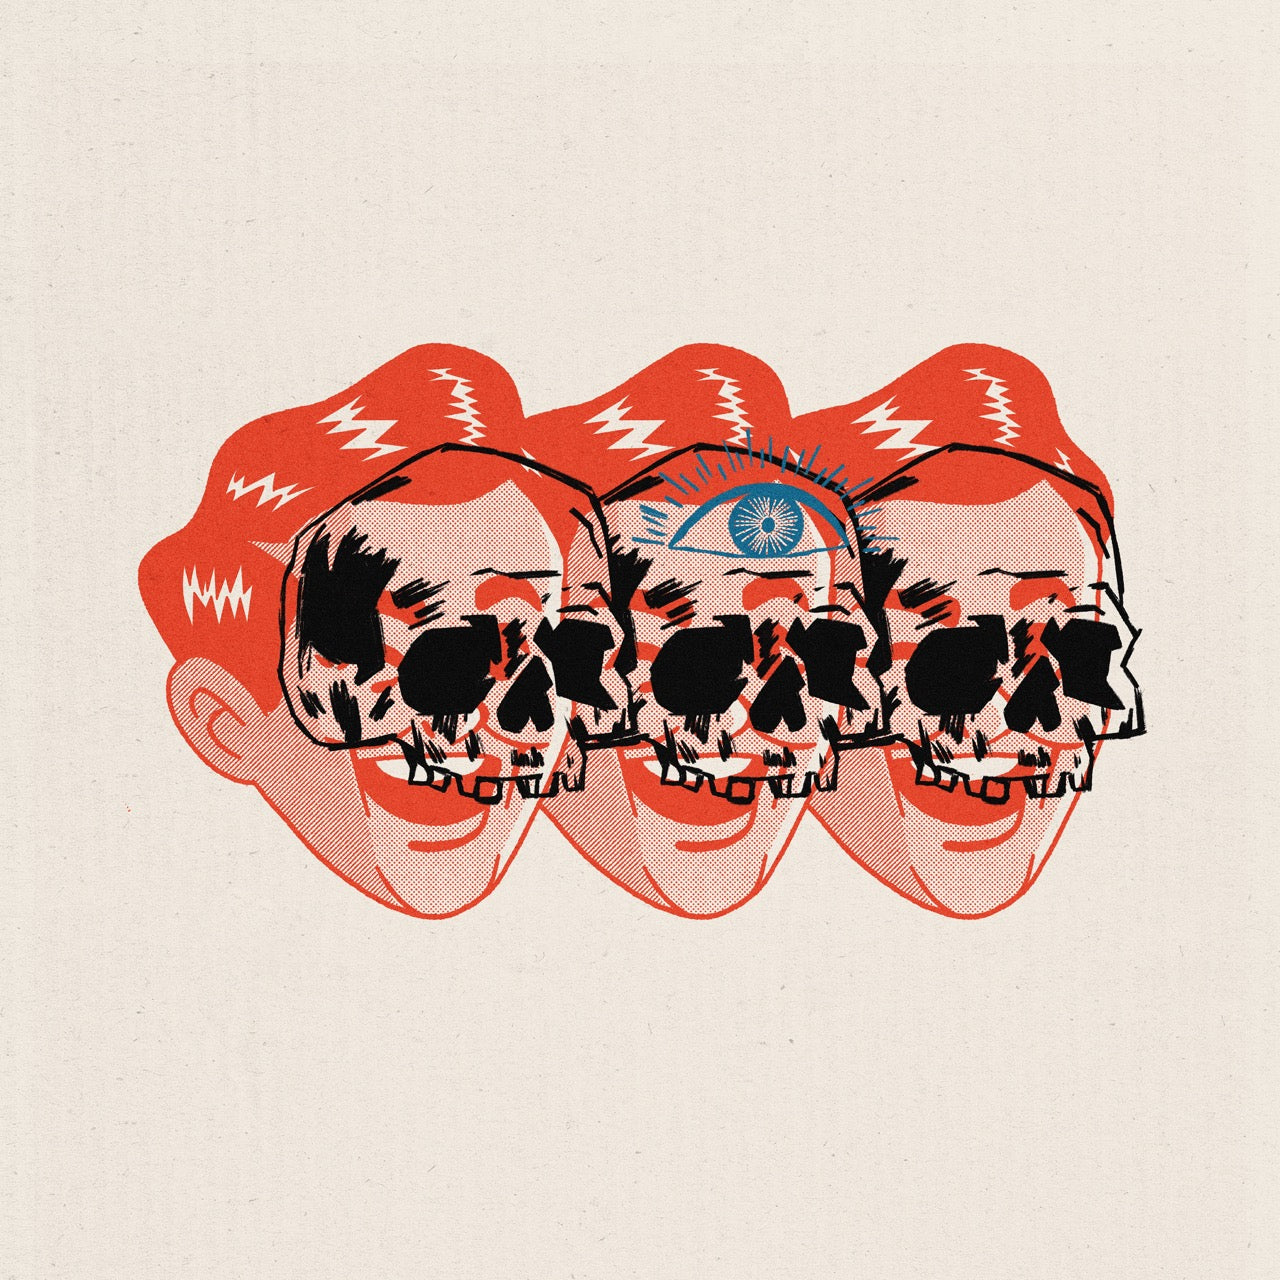 3 Skulls - whatsalexdrawn